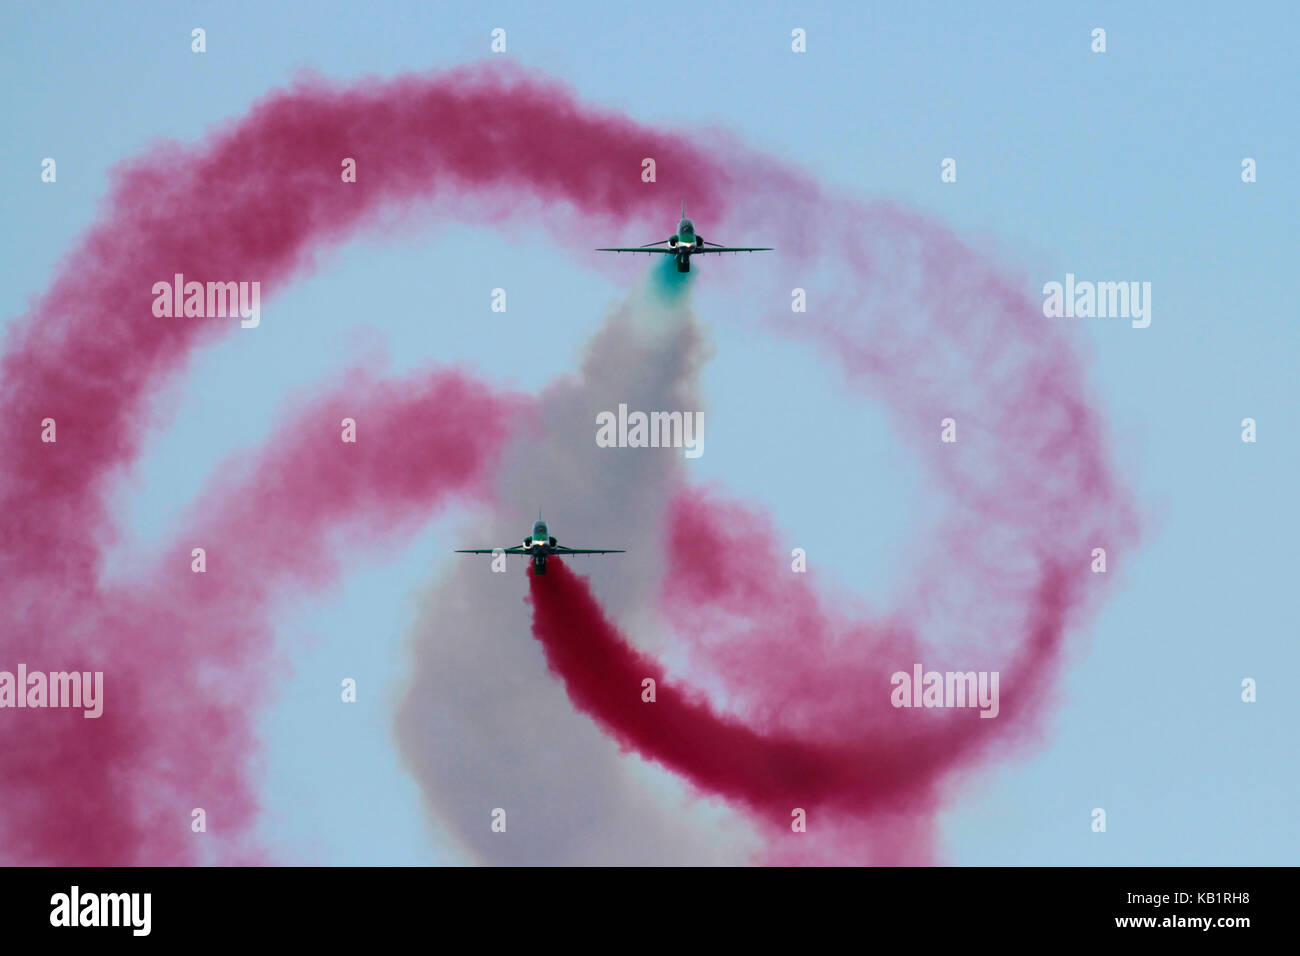 A British Aerospace Hawk of the Saudi Hawks aerobatic team barrel-rolls around another during an air display Stock Photo